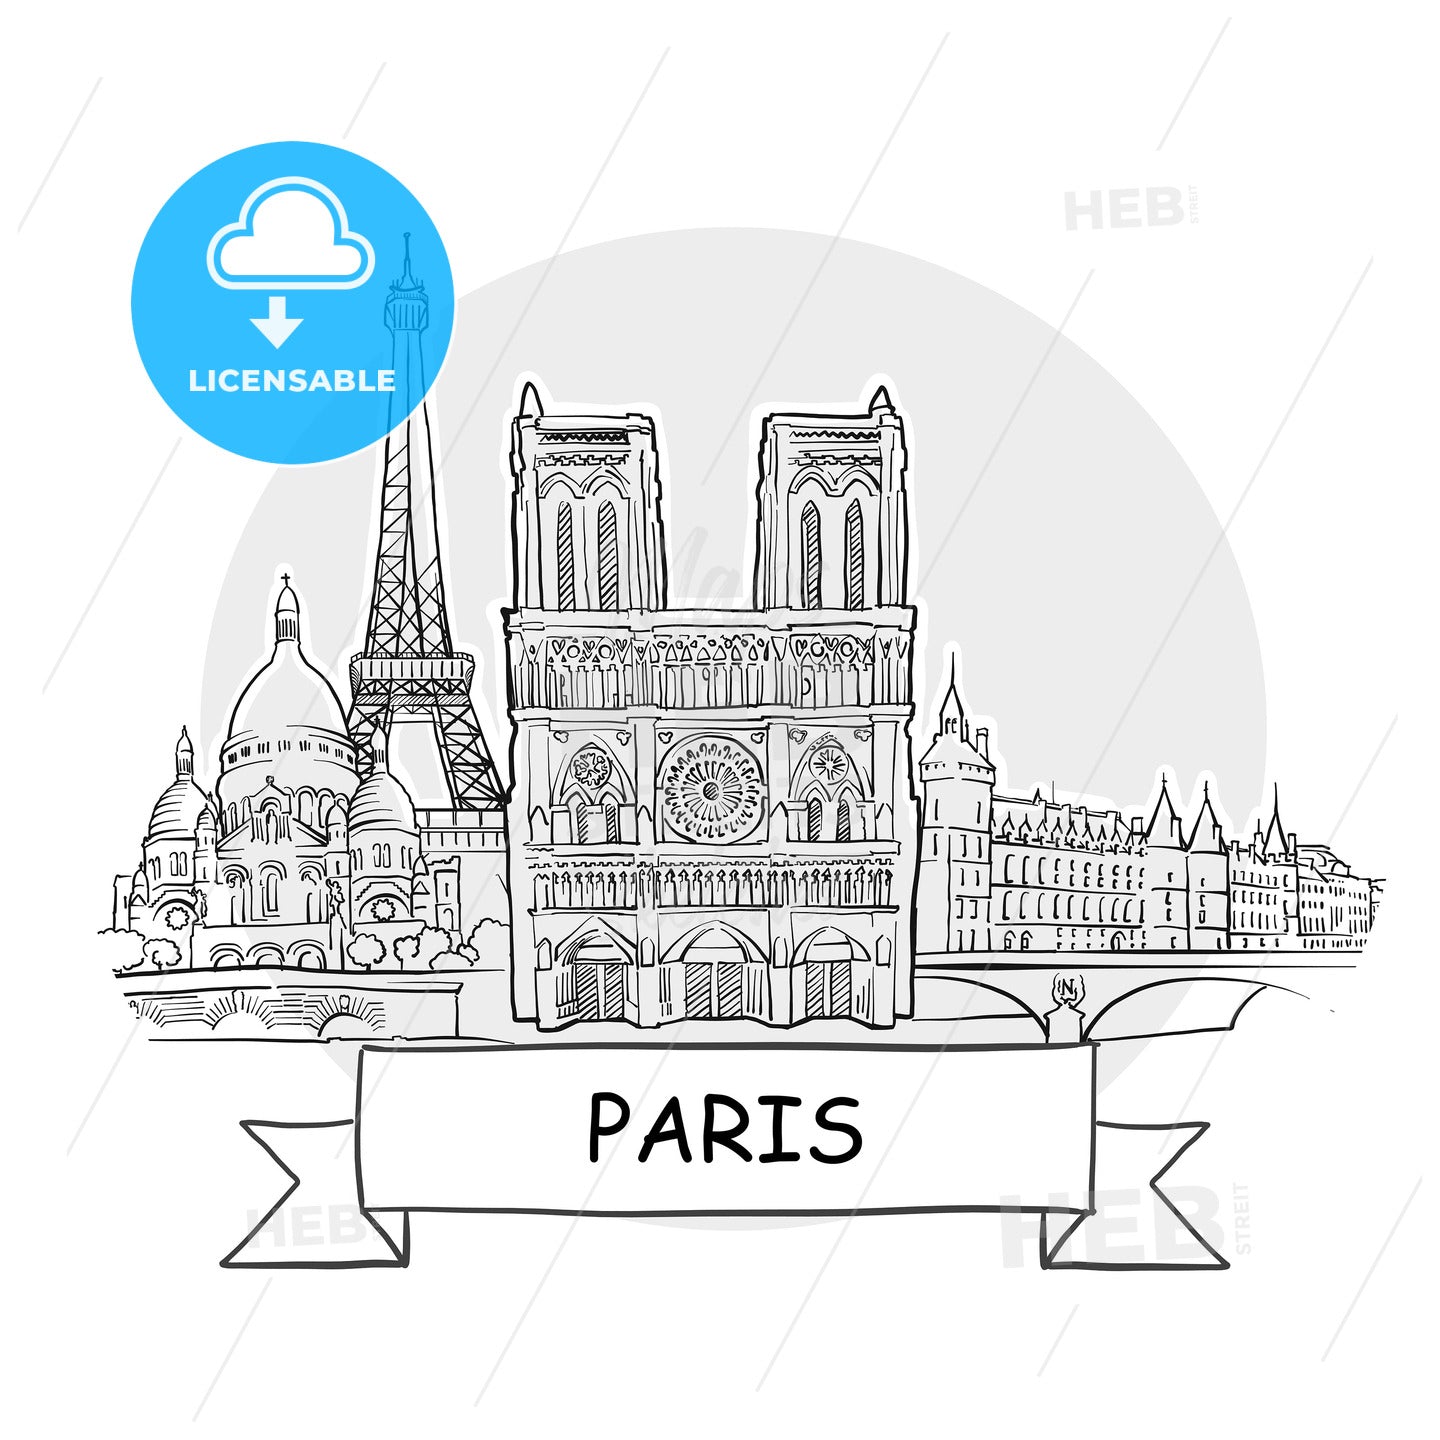 Paris hand-drawn urban vector sign – instant download